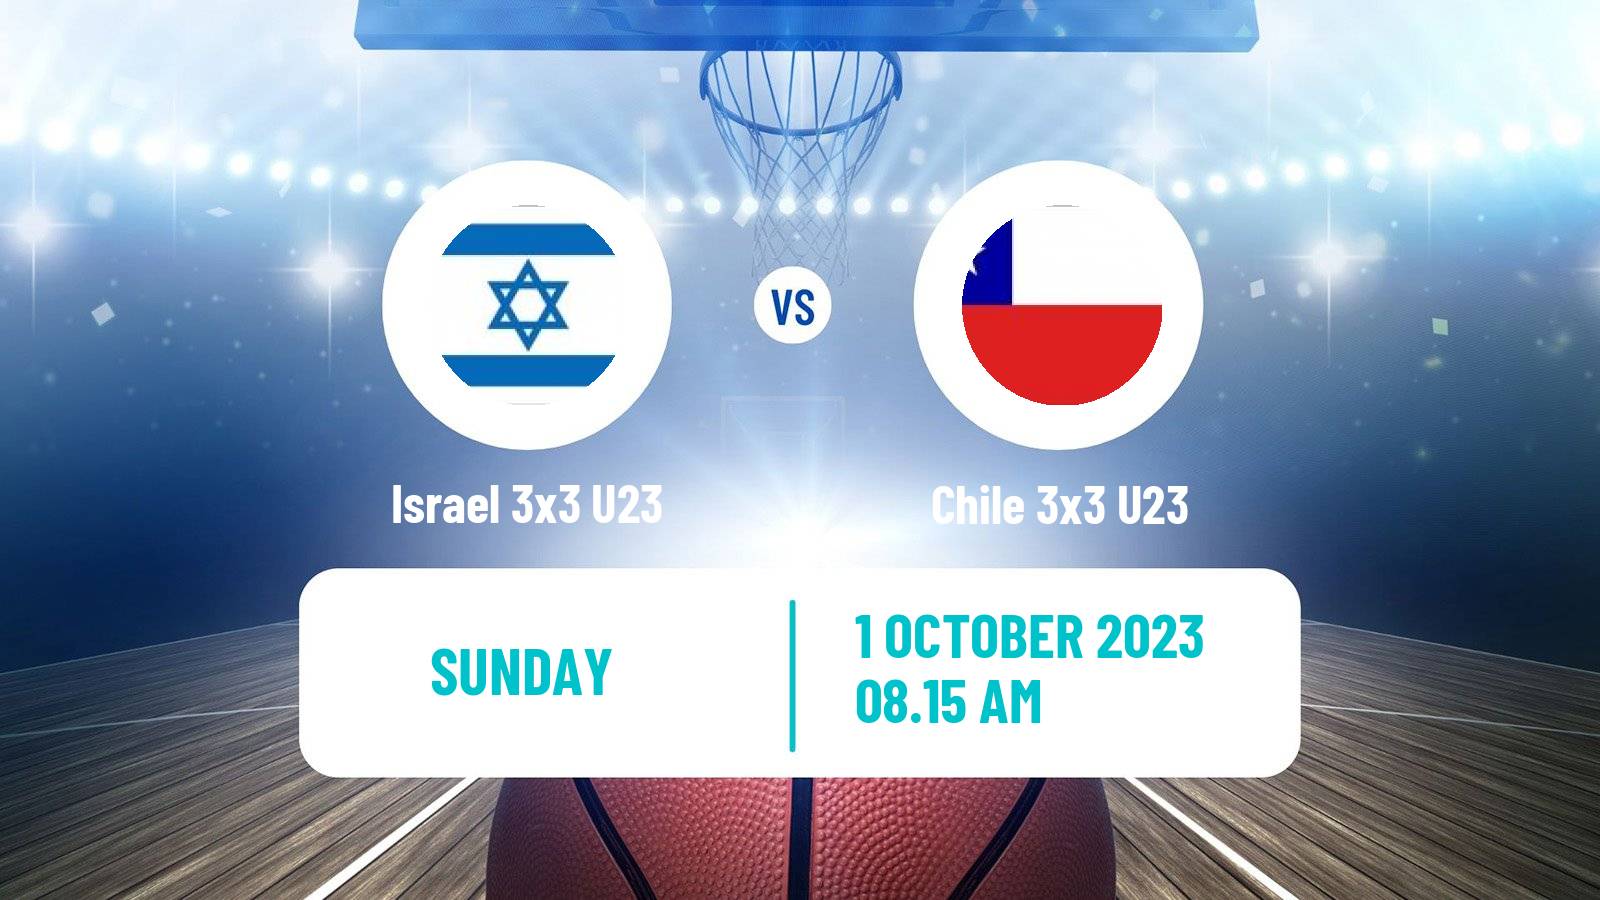 Basketball World Cup Basketball 3x3 U23 Israel 3x3 U23 - Chile 3x3 U23